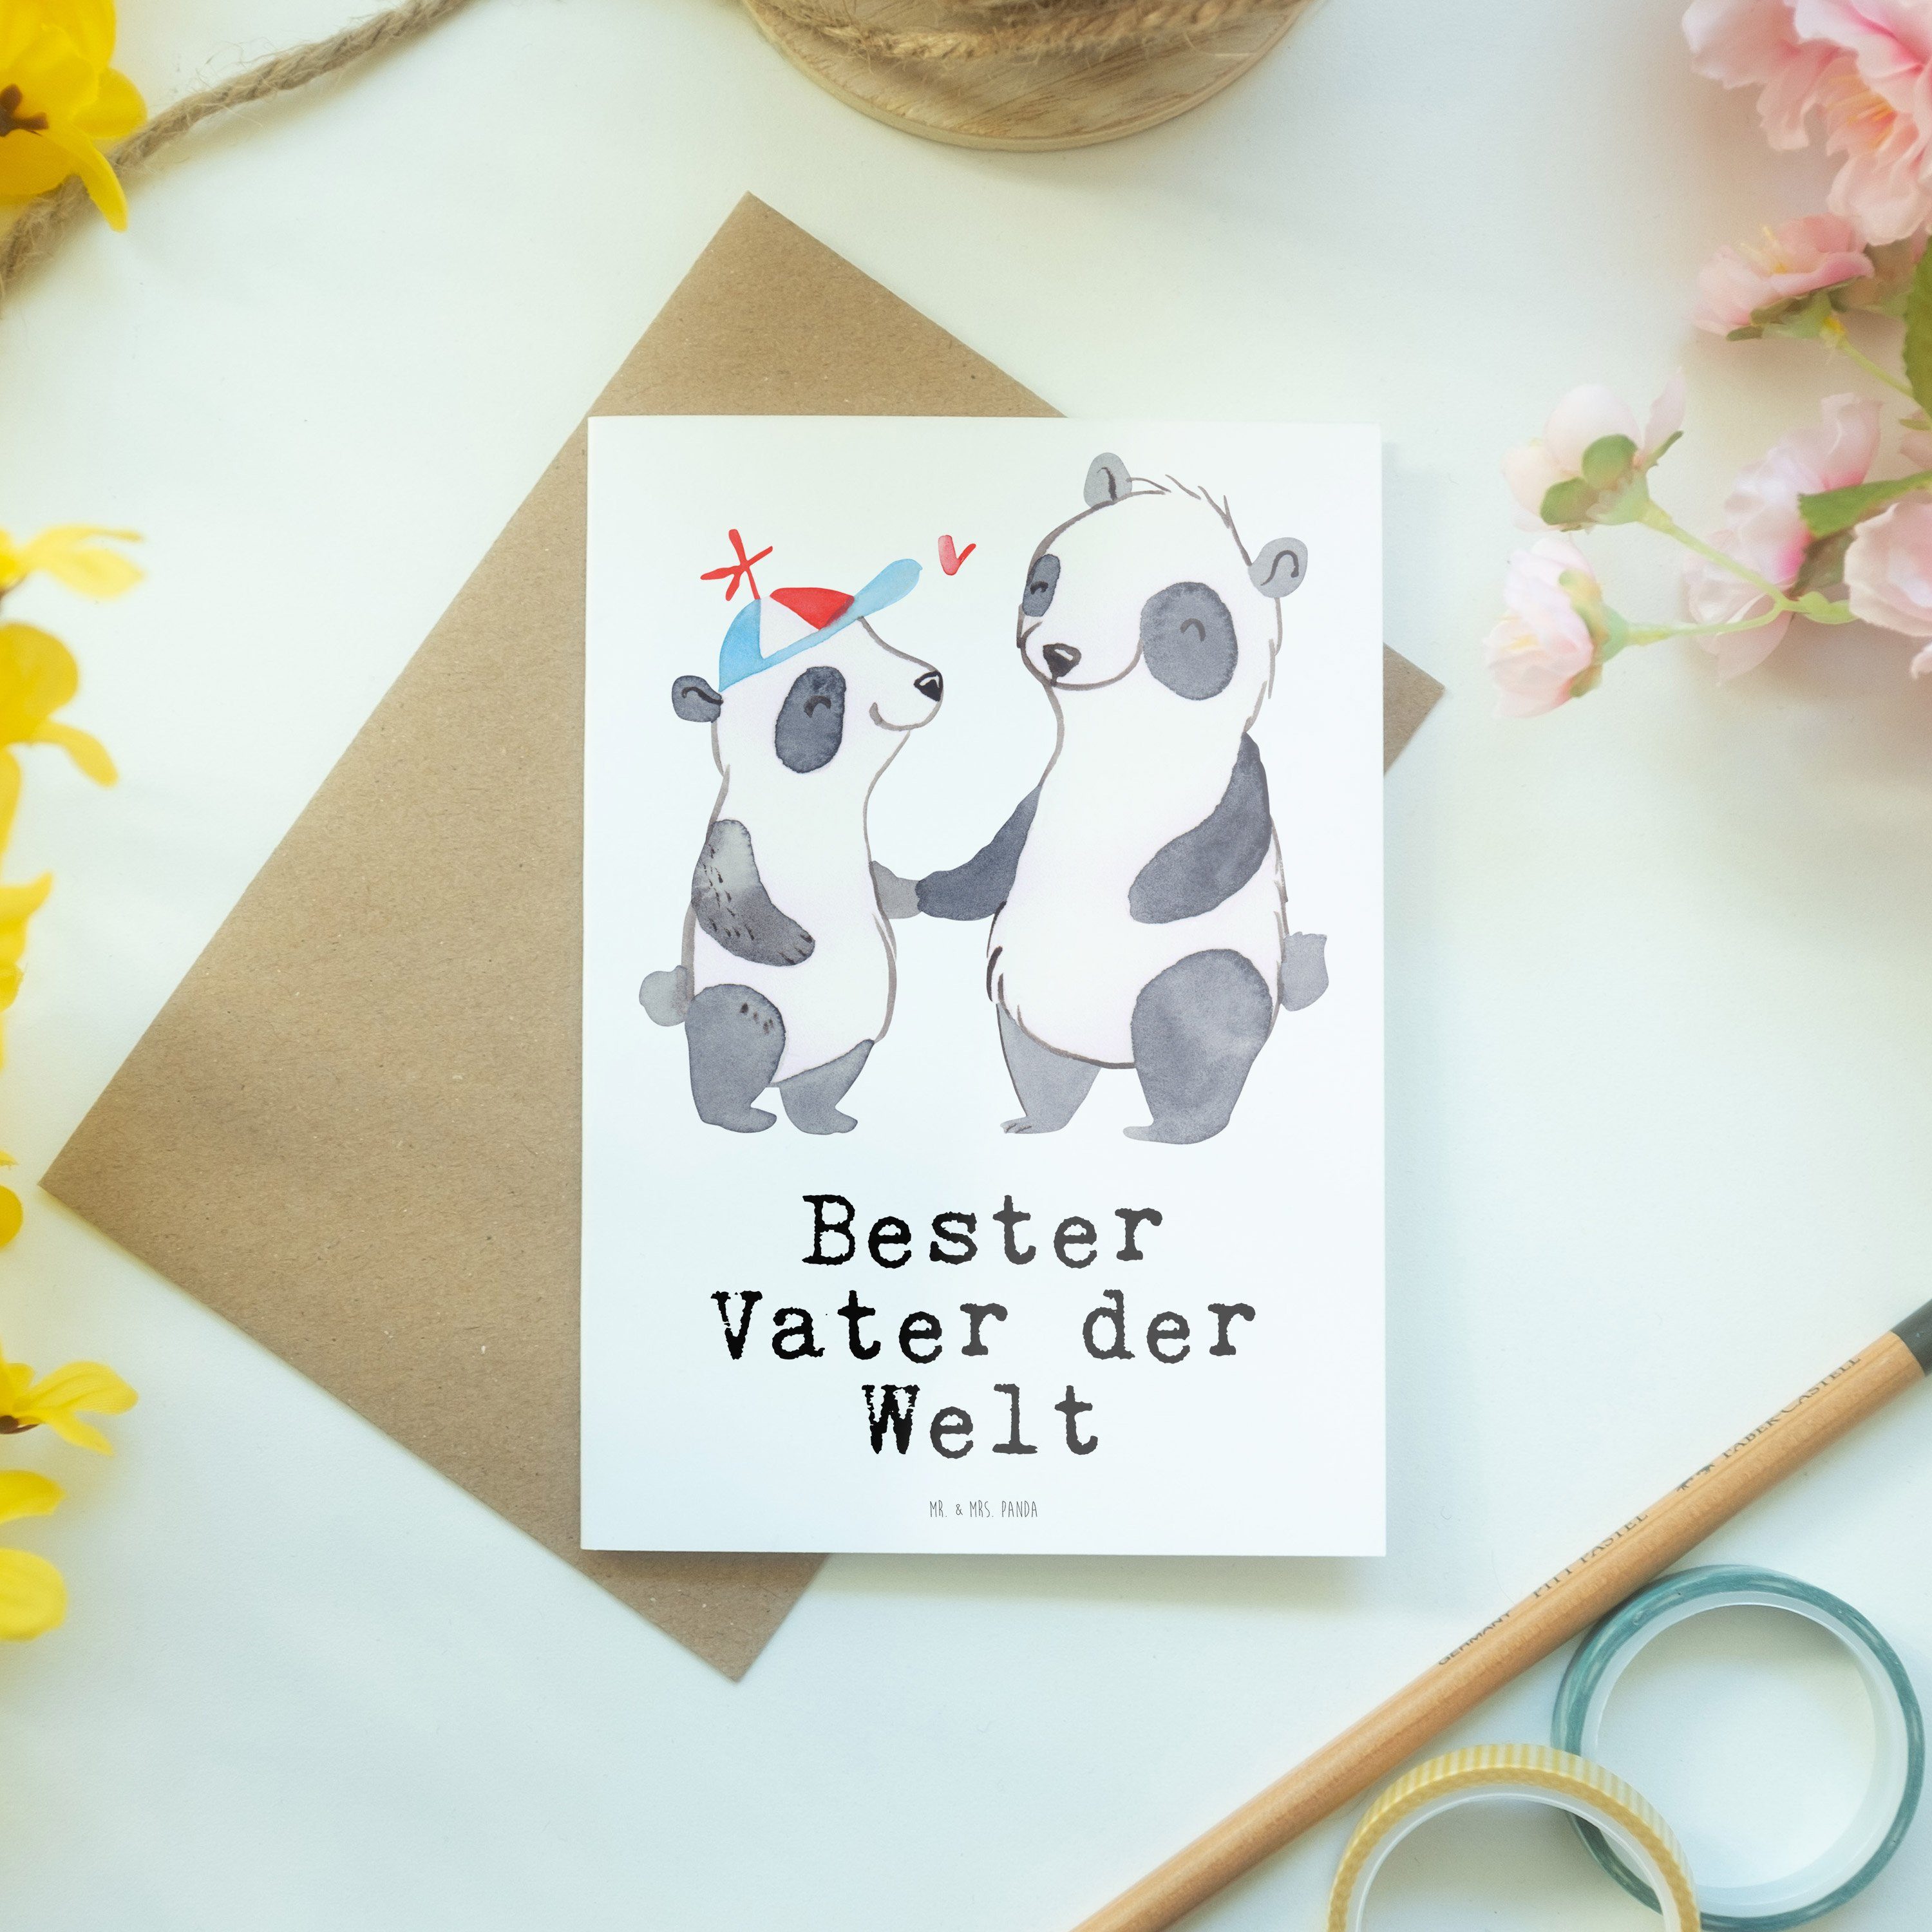 Mr. & Mrs. Panda - Welt - Karte, Vater Kla Geschenk, Bester Dankeschön, der Weiß Panda Grußkarte